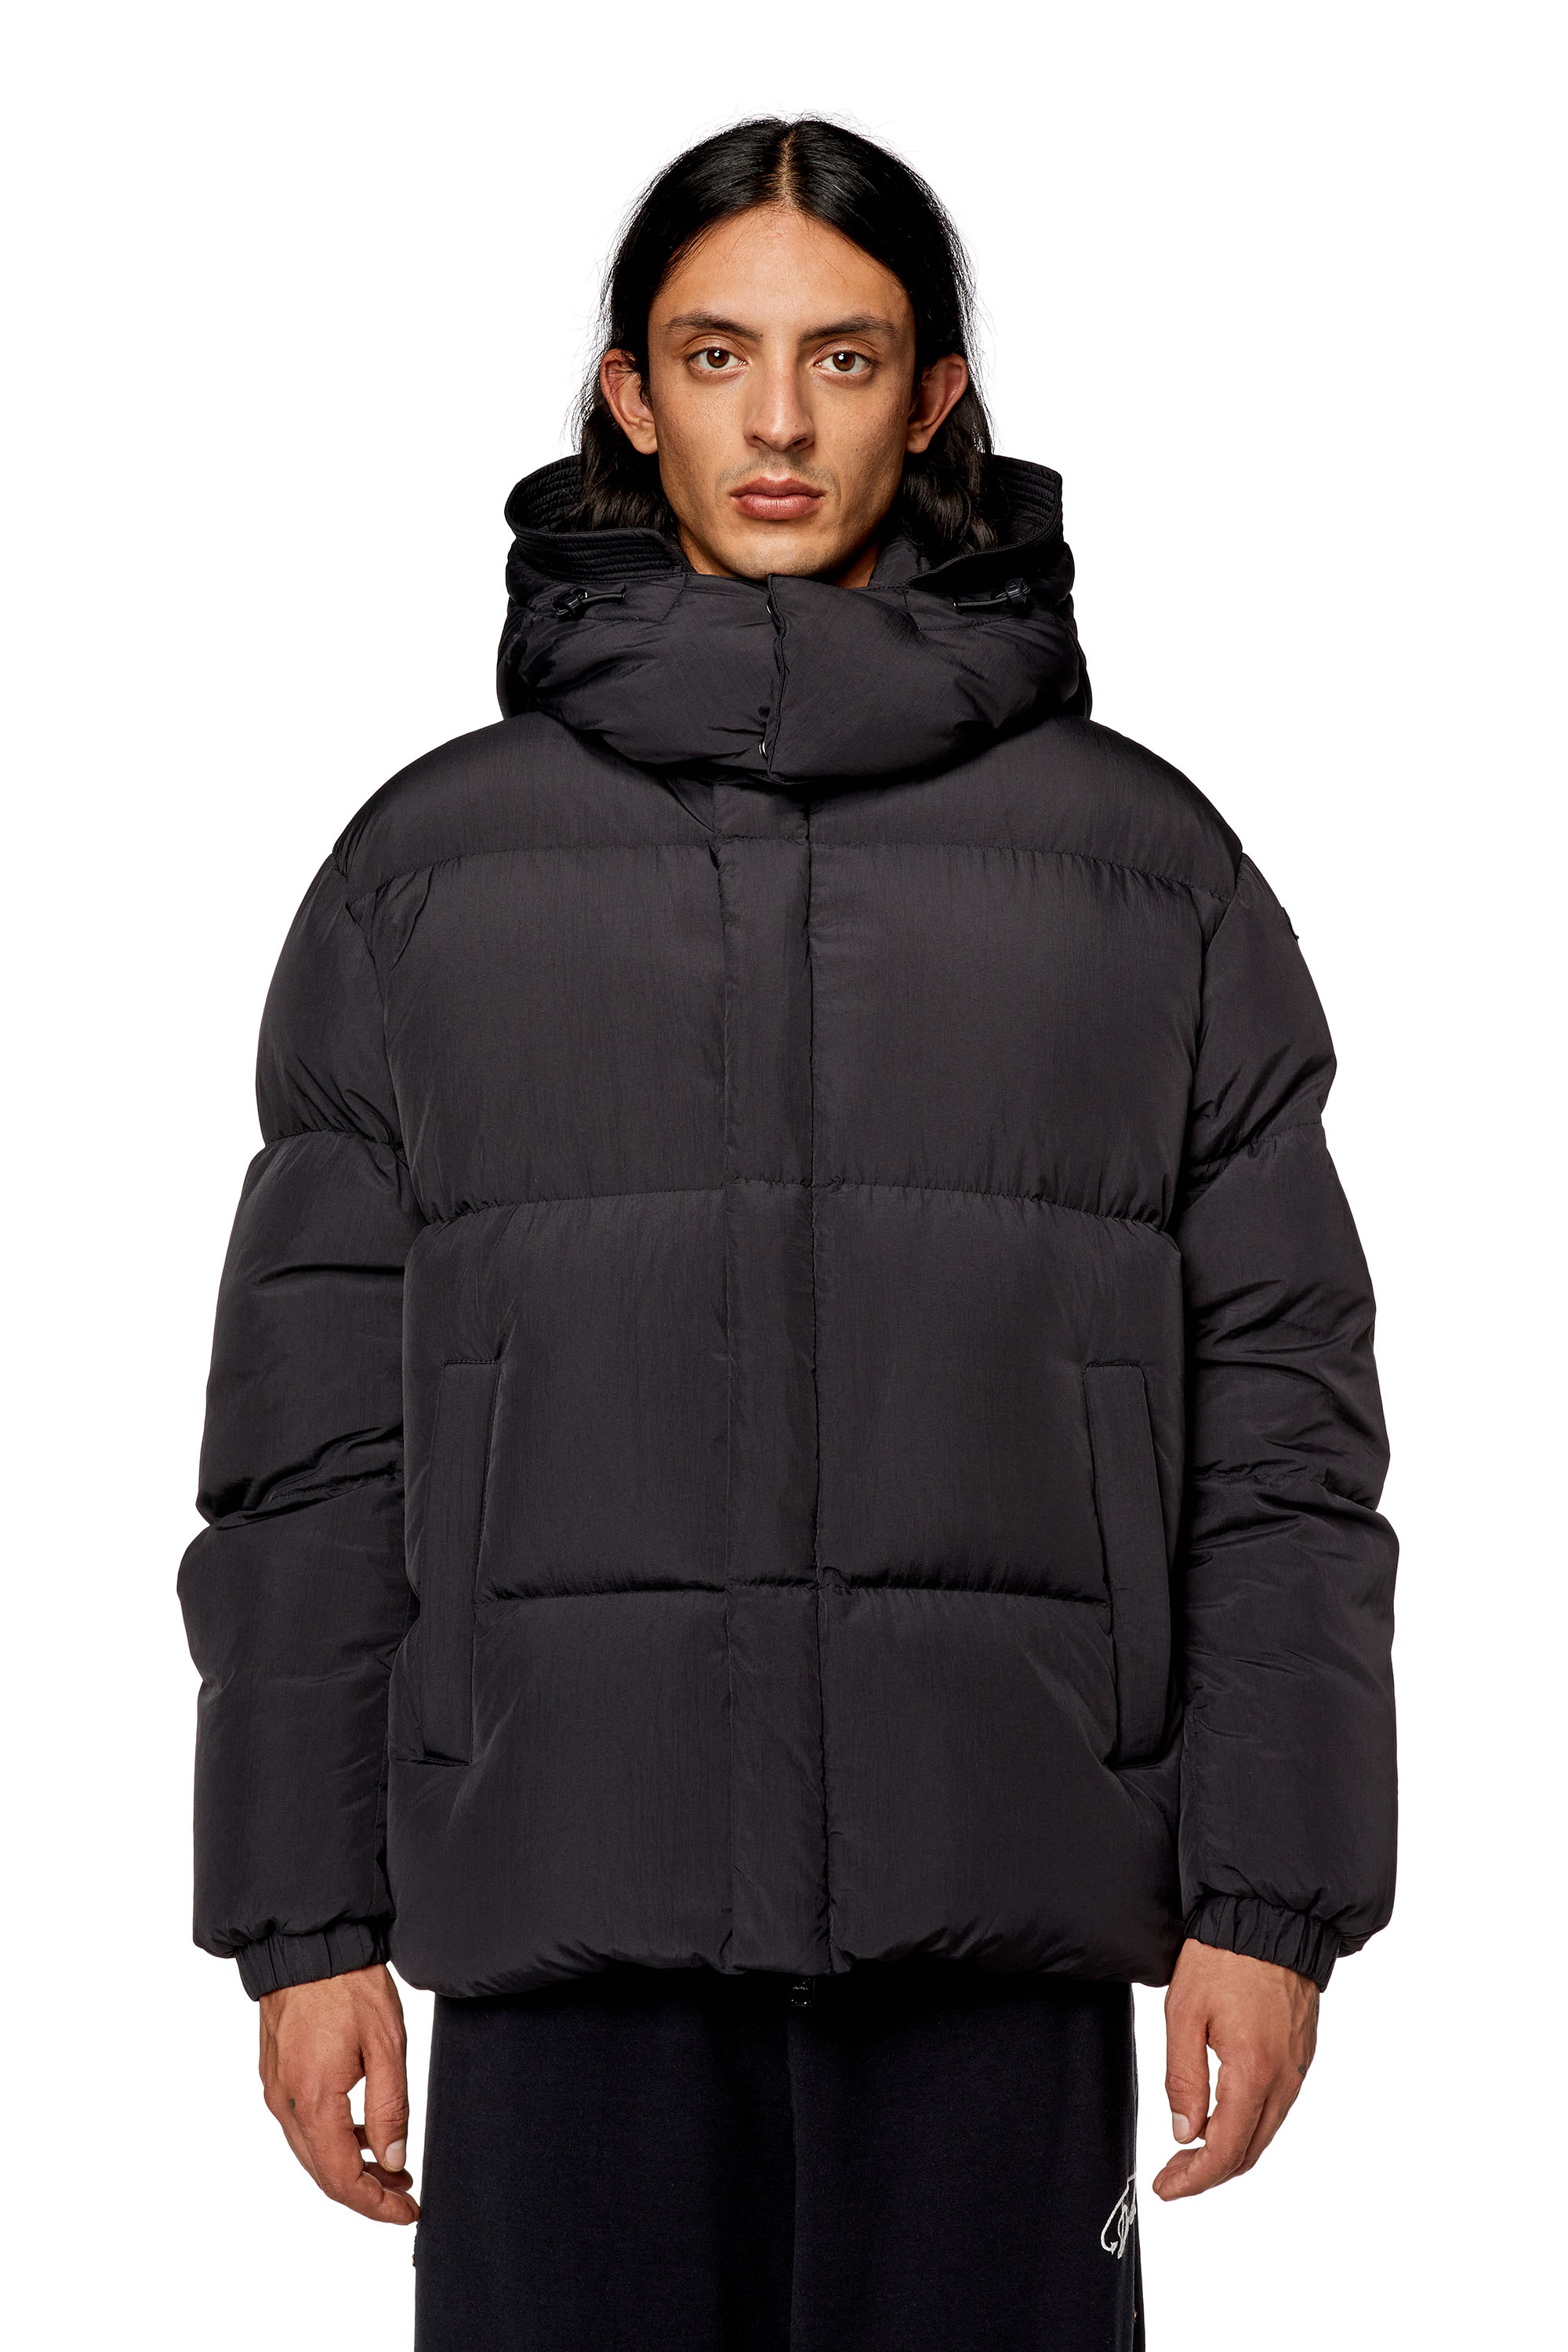 Dtydtpe Winter Jackets for Men, Men Autumn and Winter Solid Zipper Hooded  Loose Outdoor Cotton Coat Top Blouse Jacket Jackets for Men